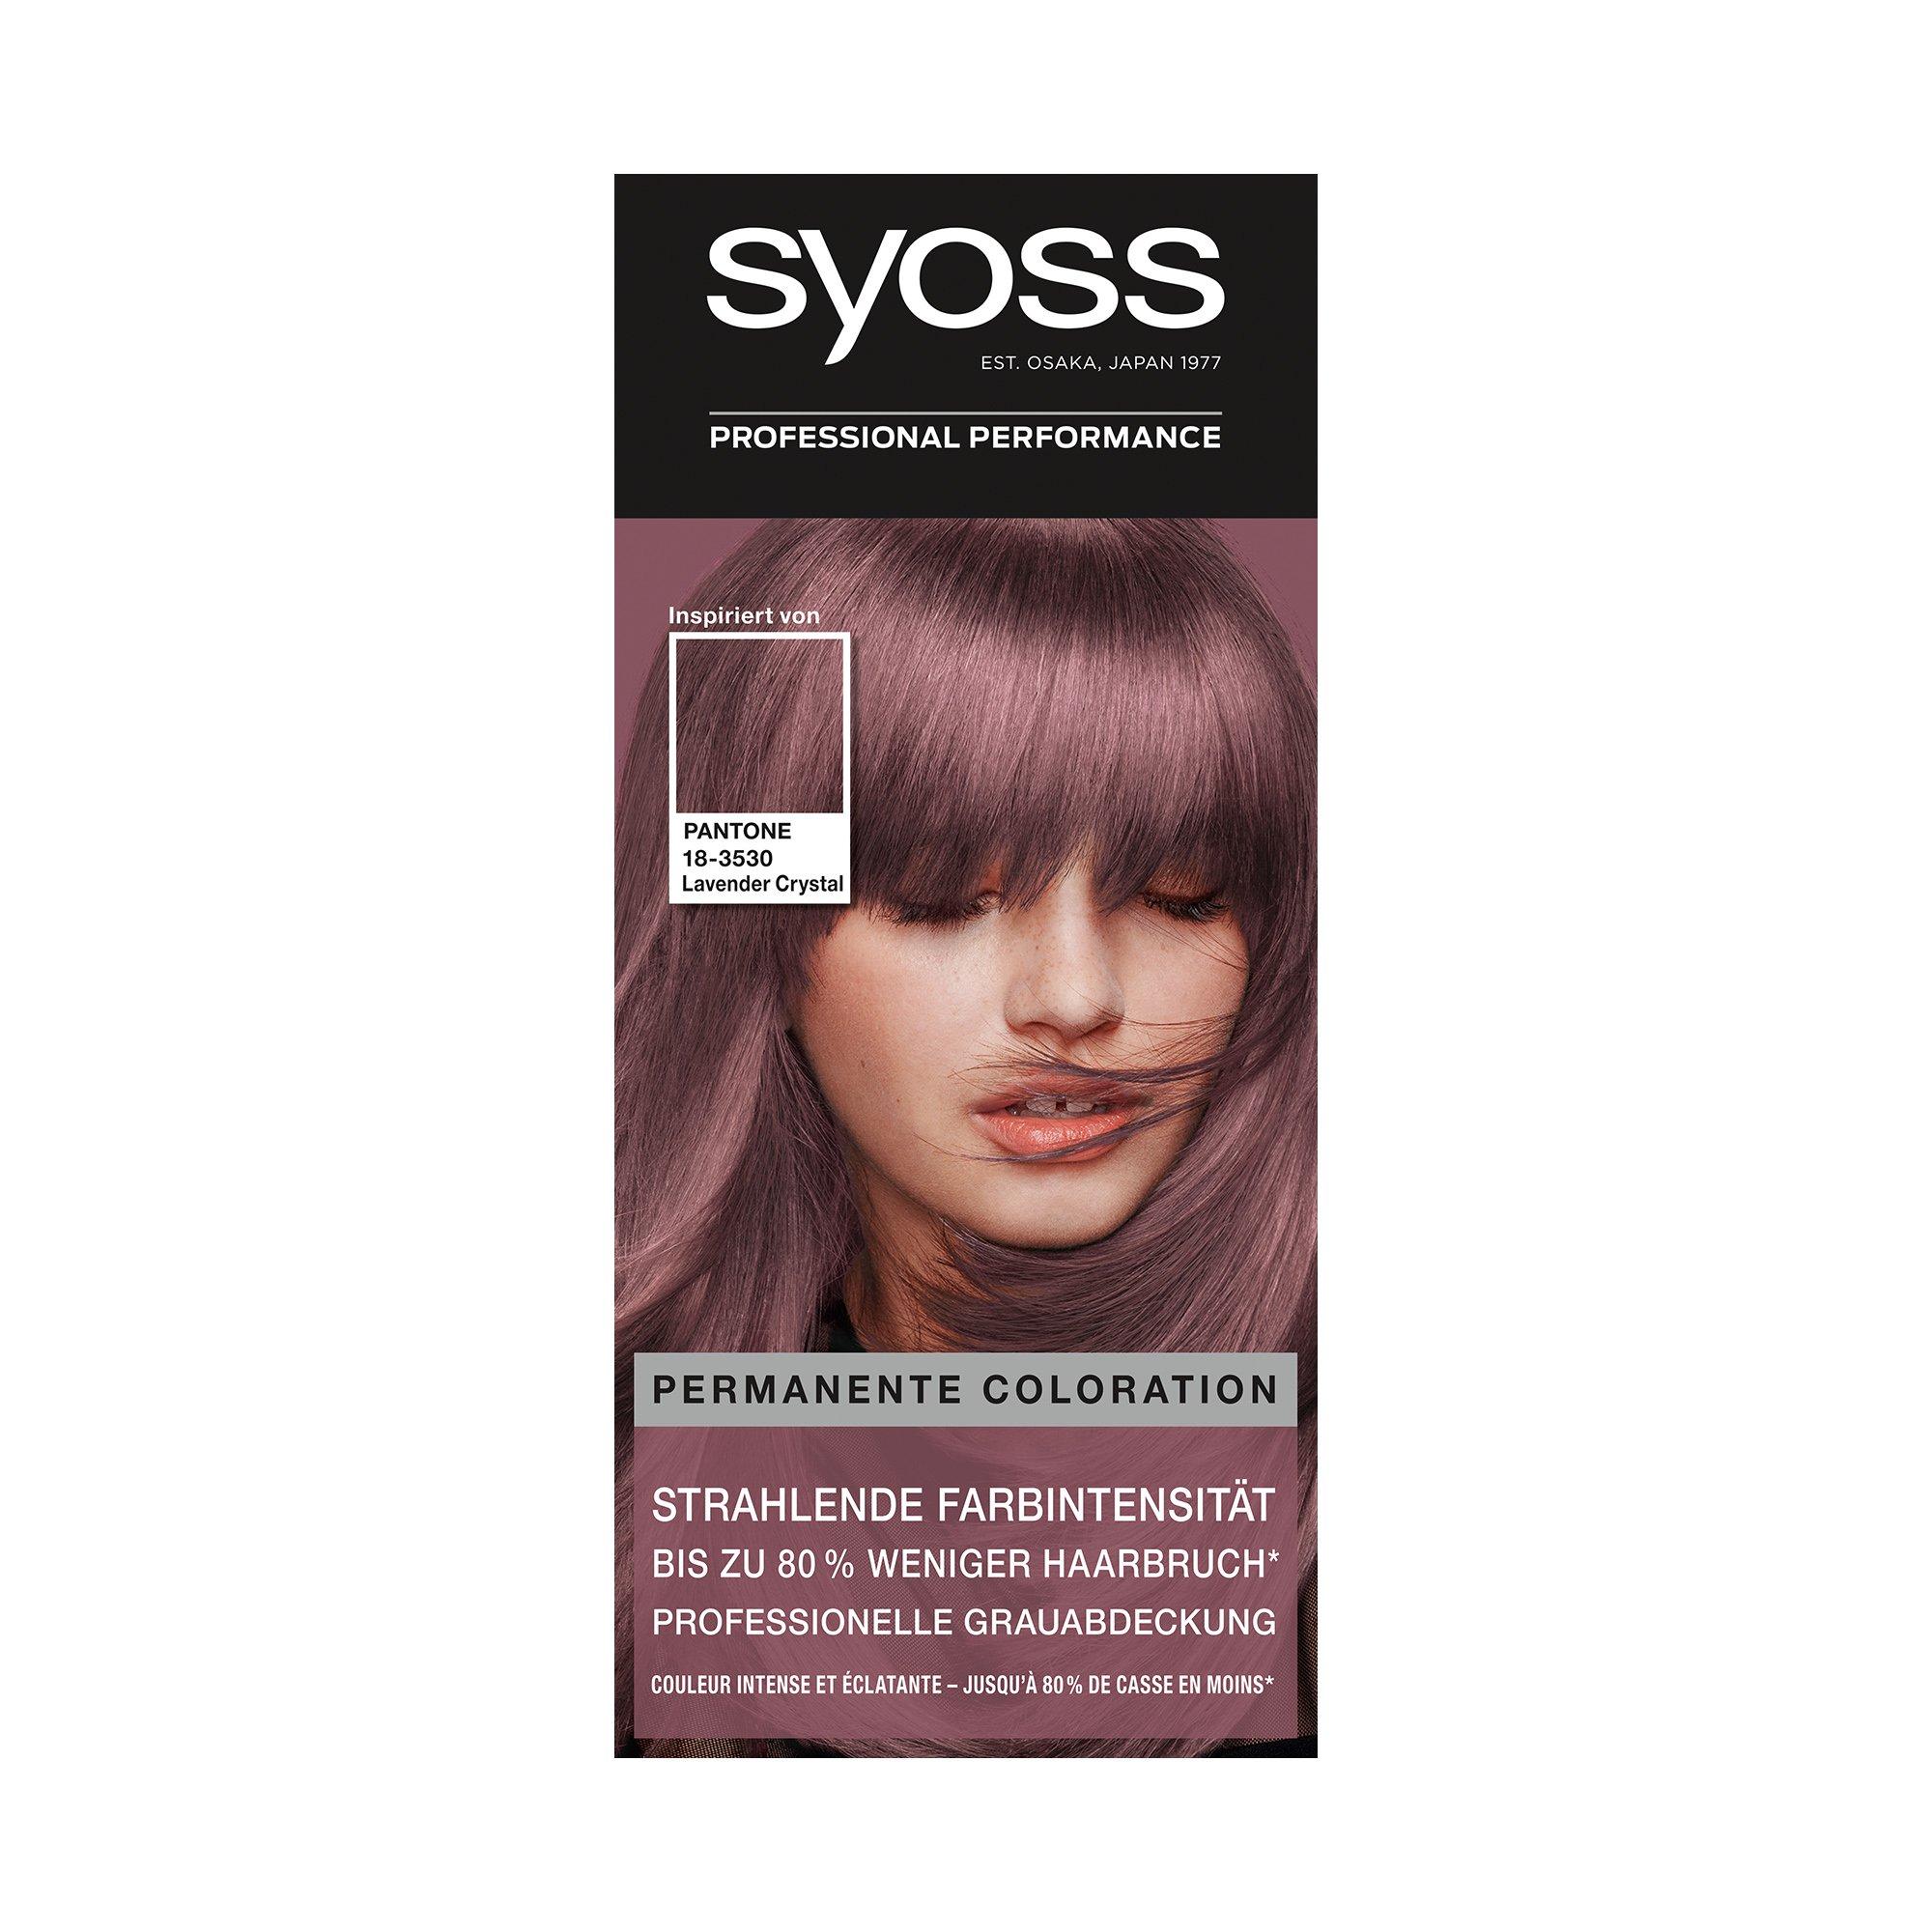 syoss Syoss BL XPantone 6-66 Roasted Pecan Permanente Coloration 